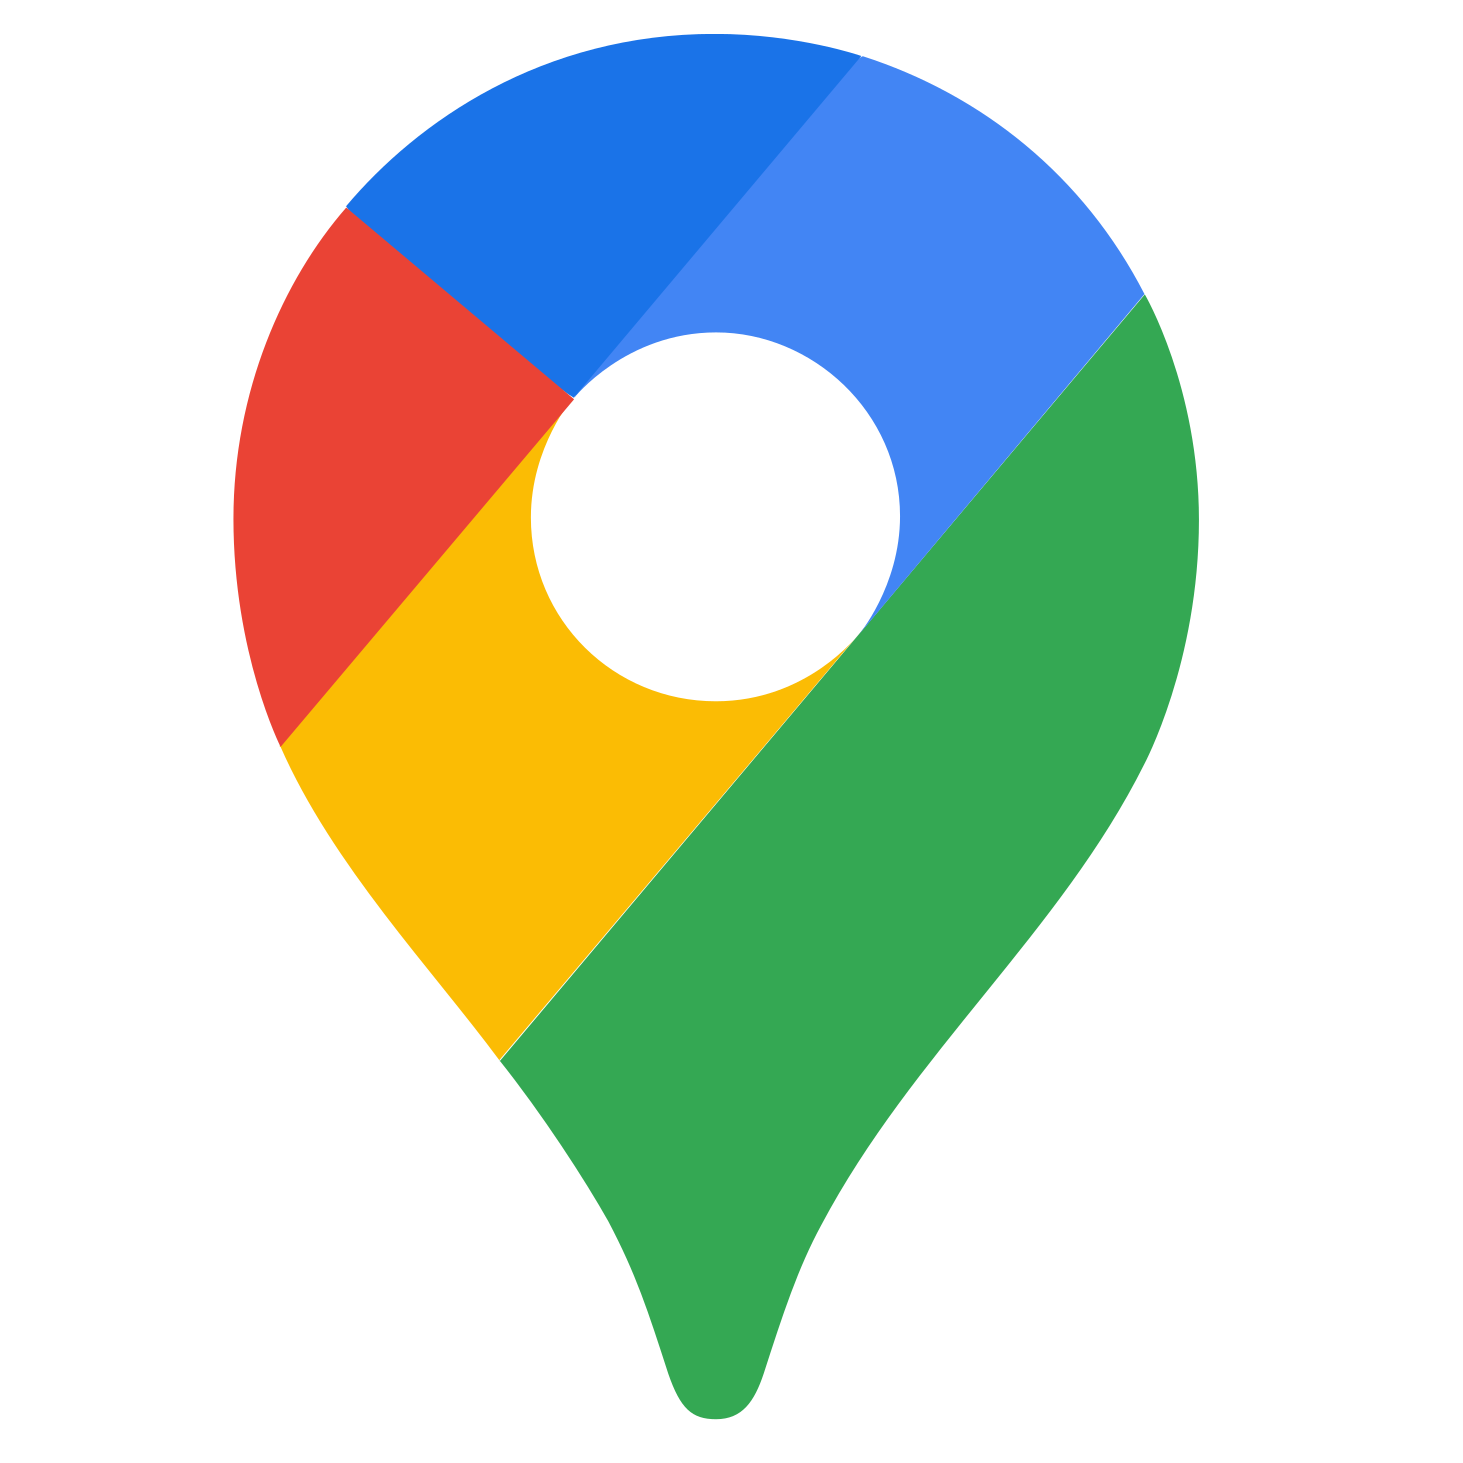 نقشه گوگل مپ